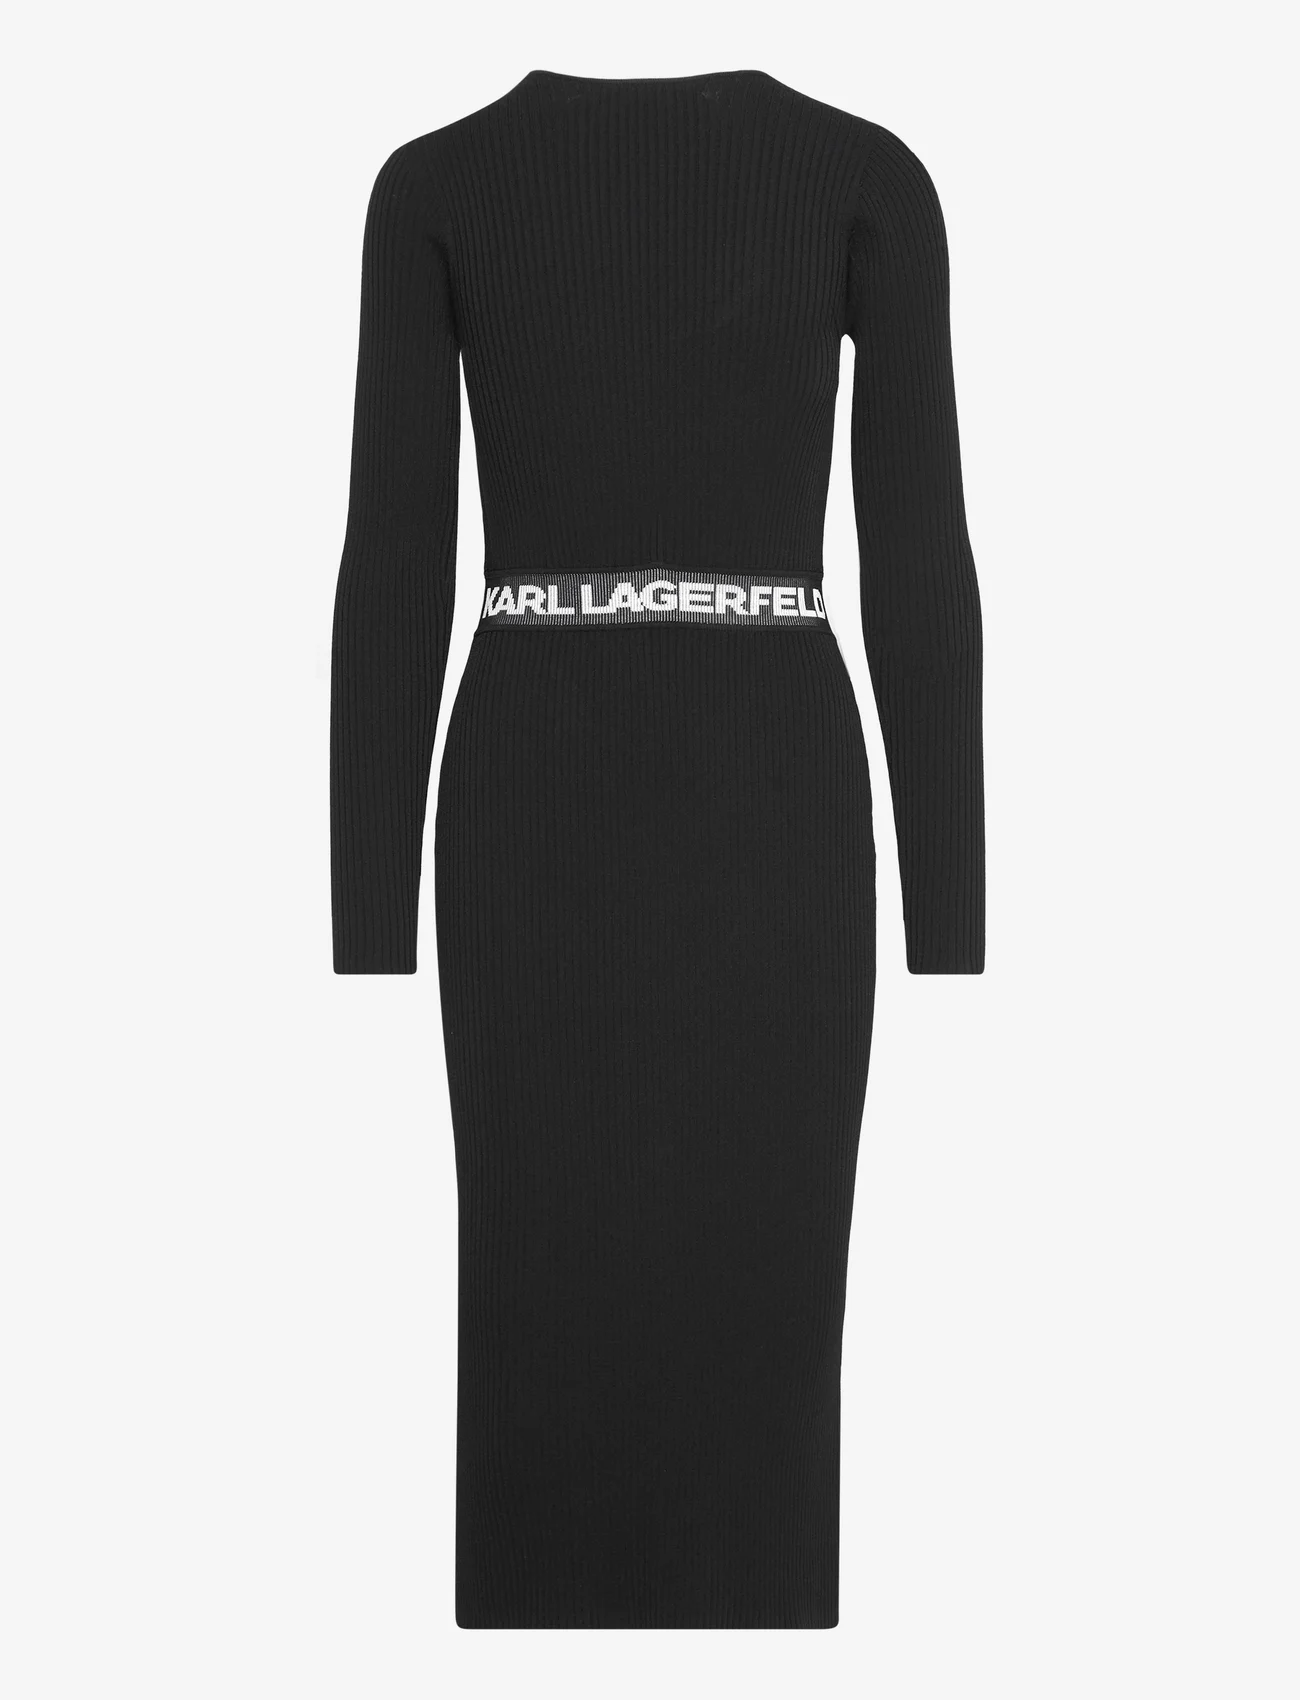 Karl Lagerfeld - lslv logo knit dress - midi dresses - black - 1